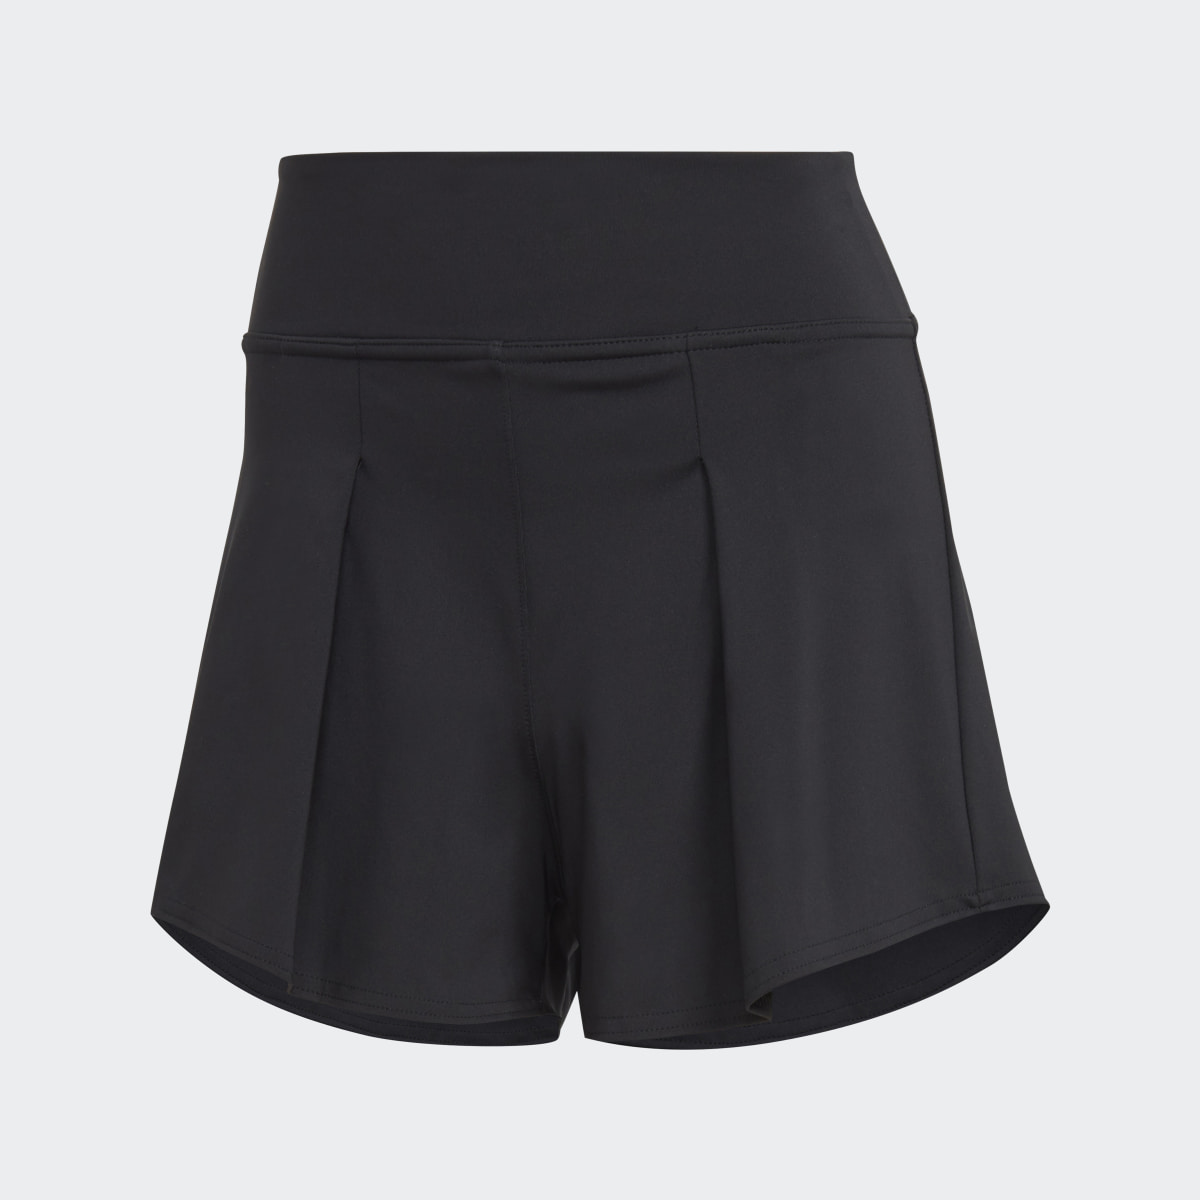 Adidas Tennis Match Shorts. 8